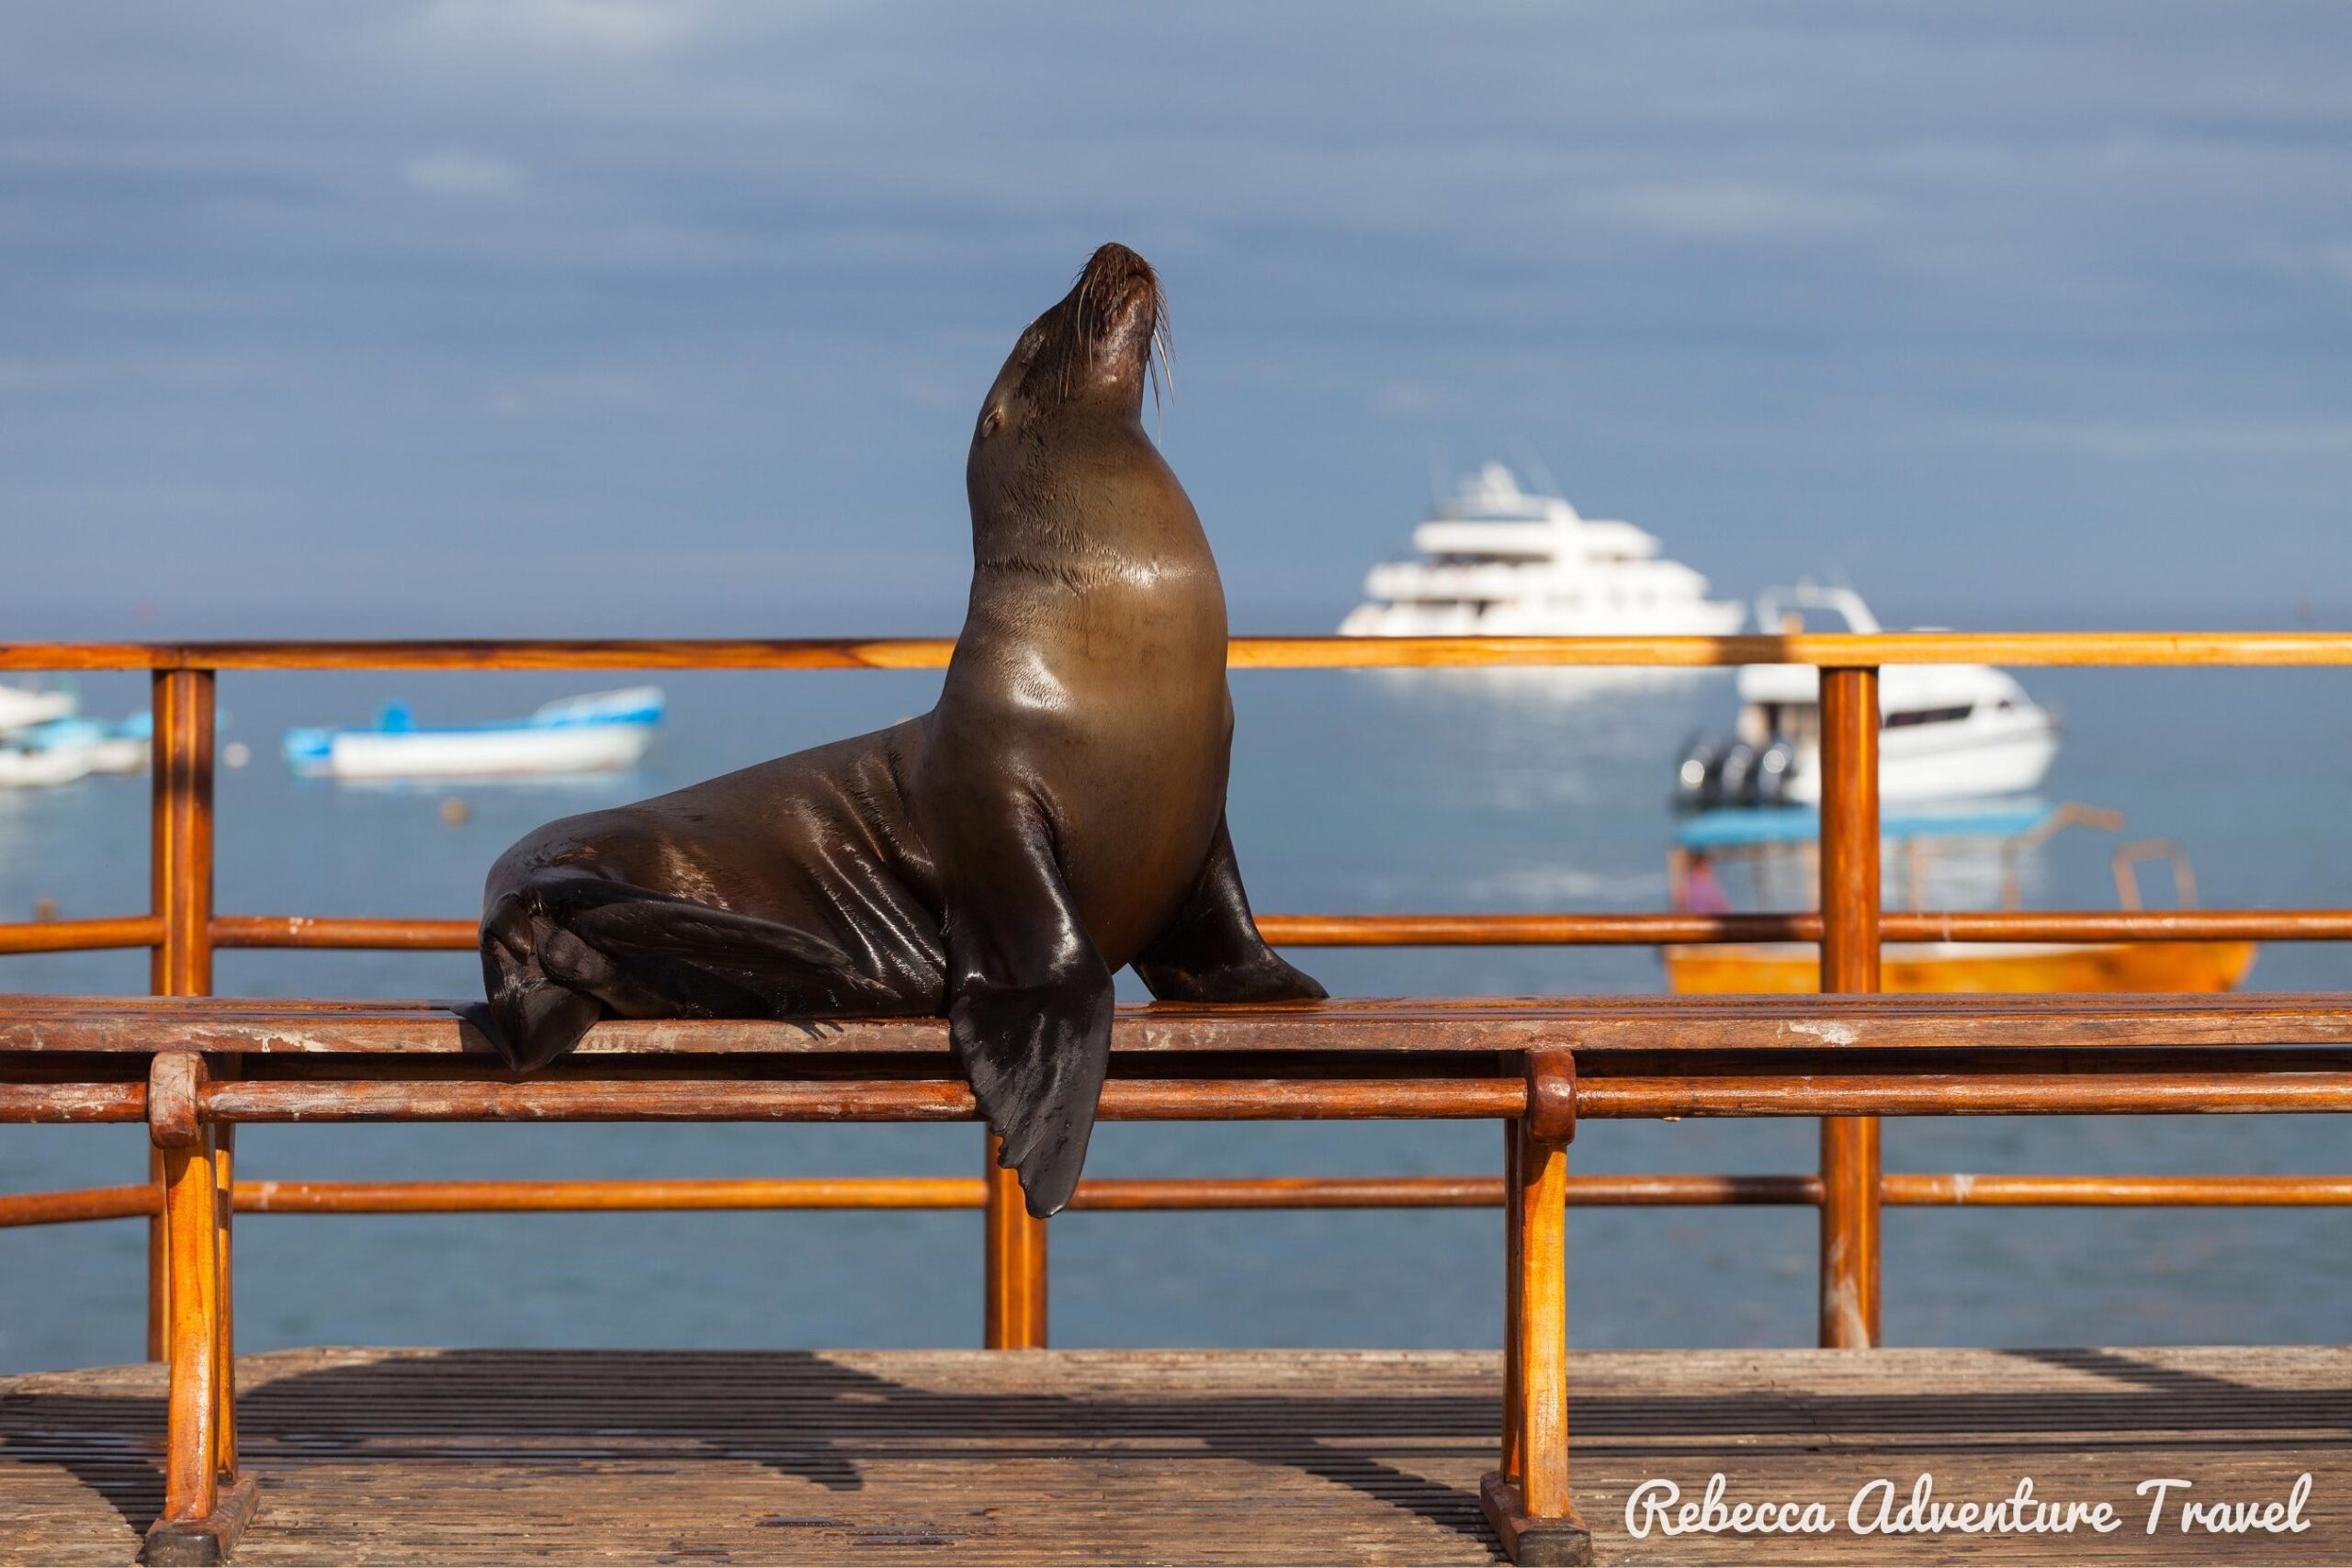 Archipel II Galapagos sea lion